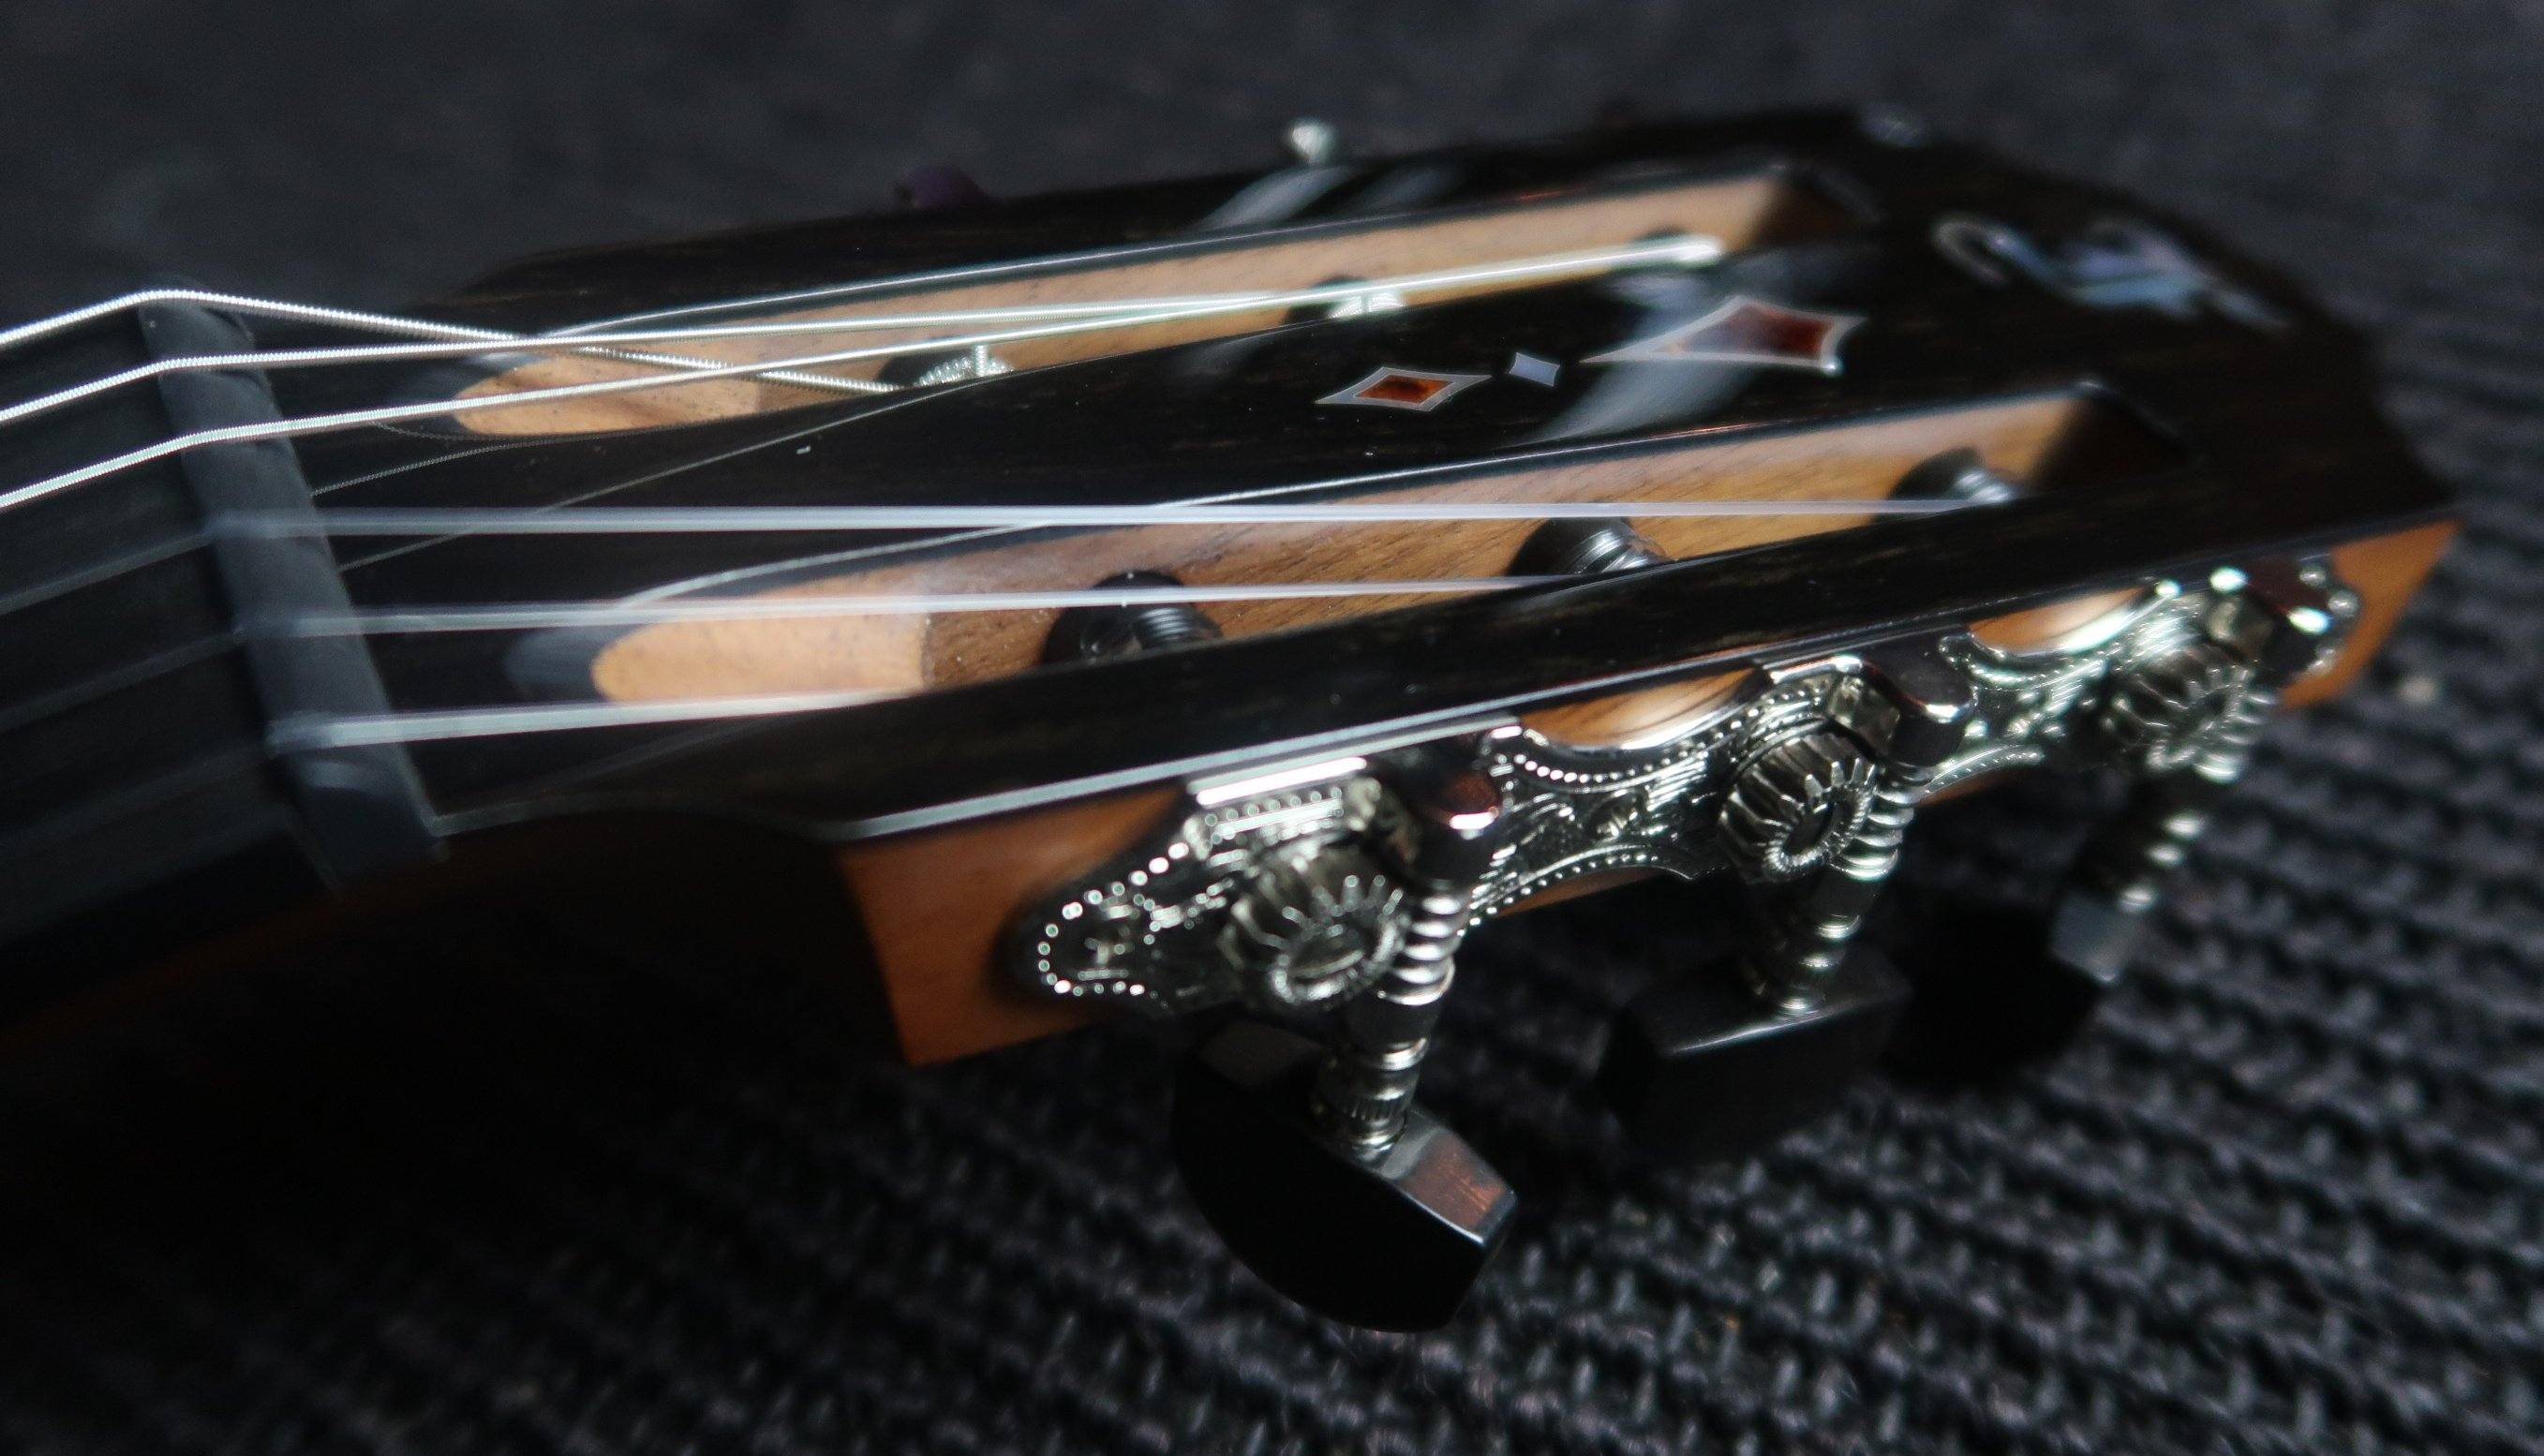 Furch GN4SR Nylon String Hybrid Cutaway Classic, Nylon Strung Guitar for sale at Richards Guitars.